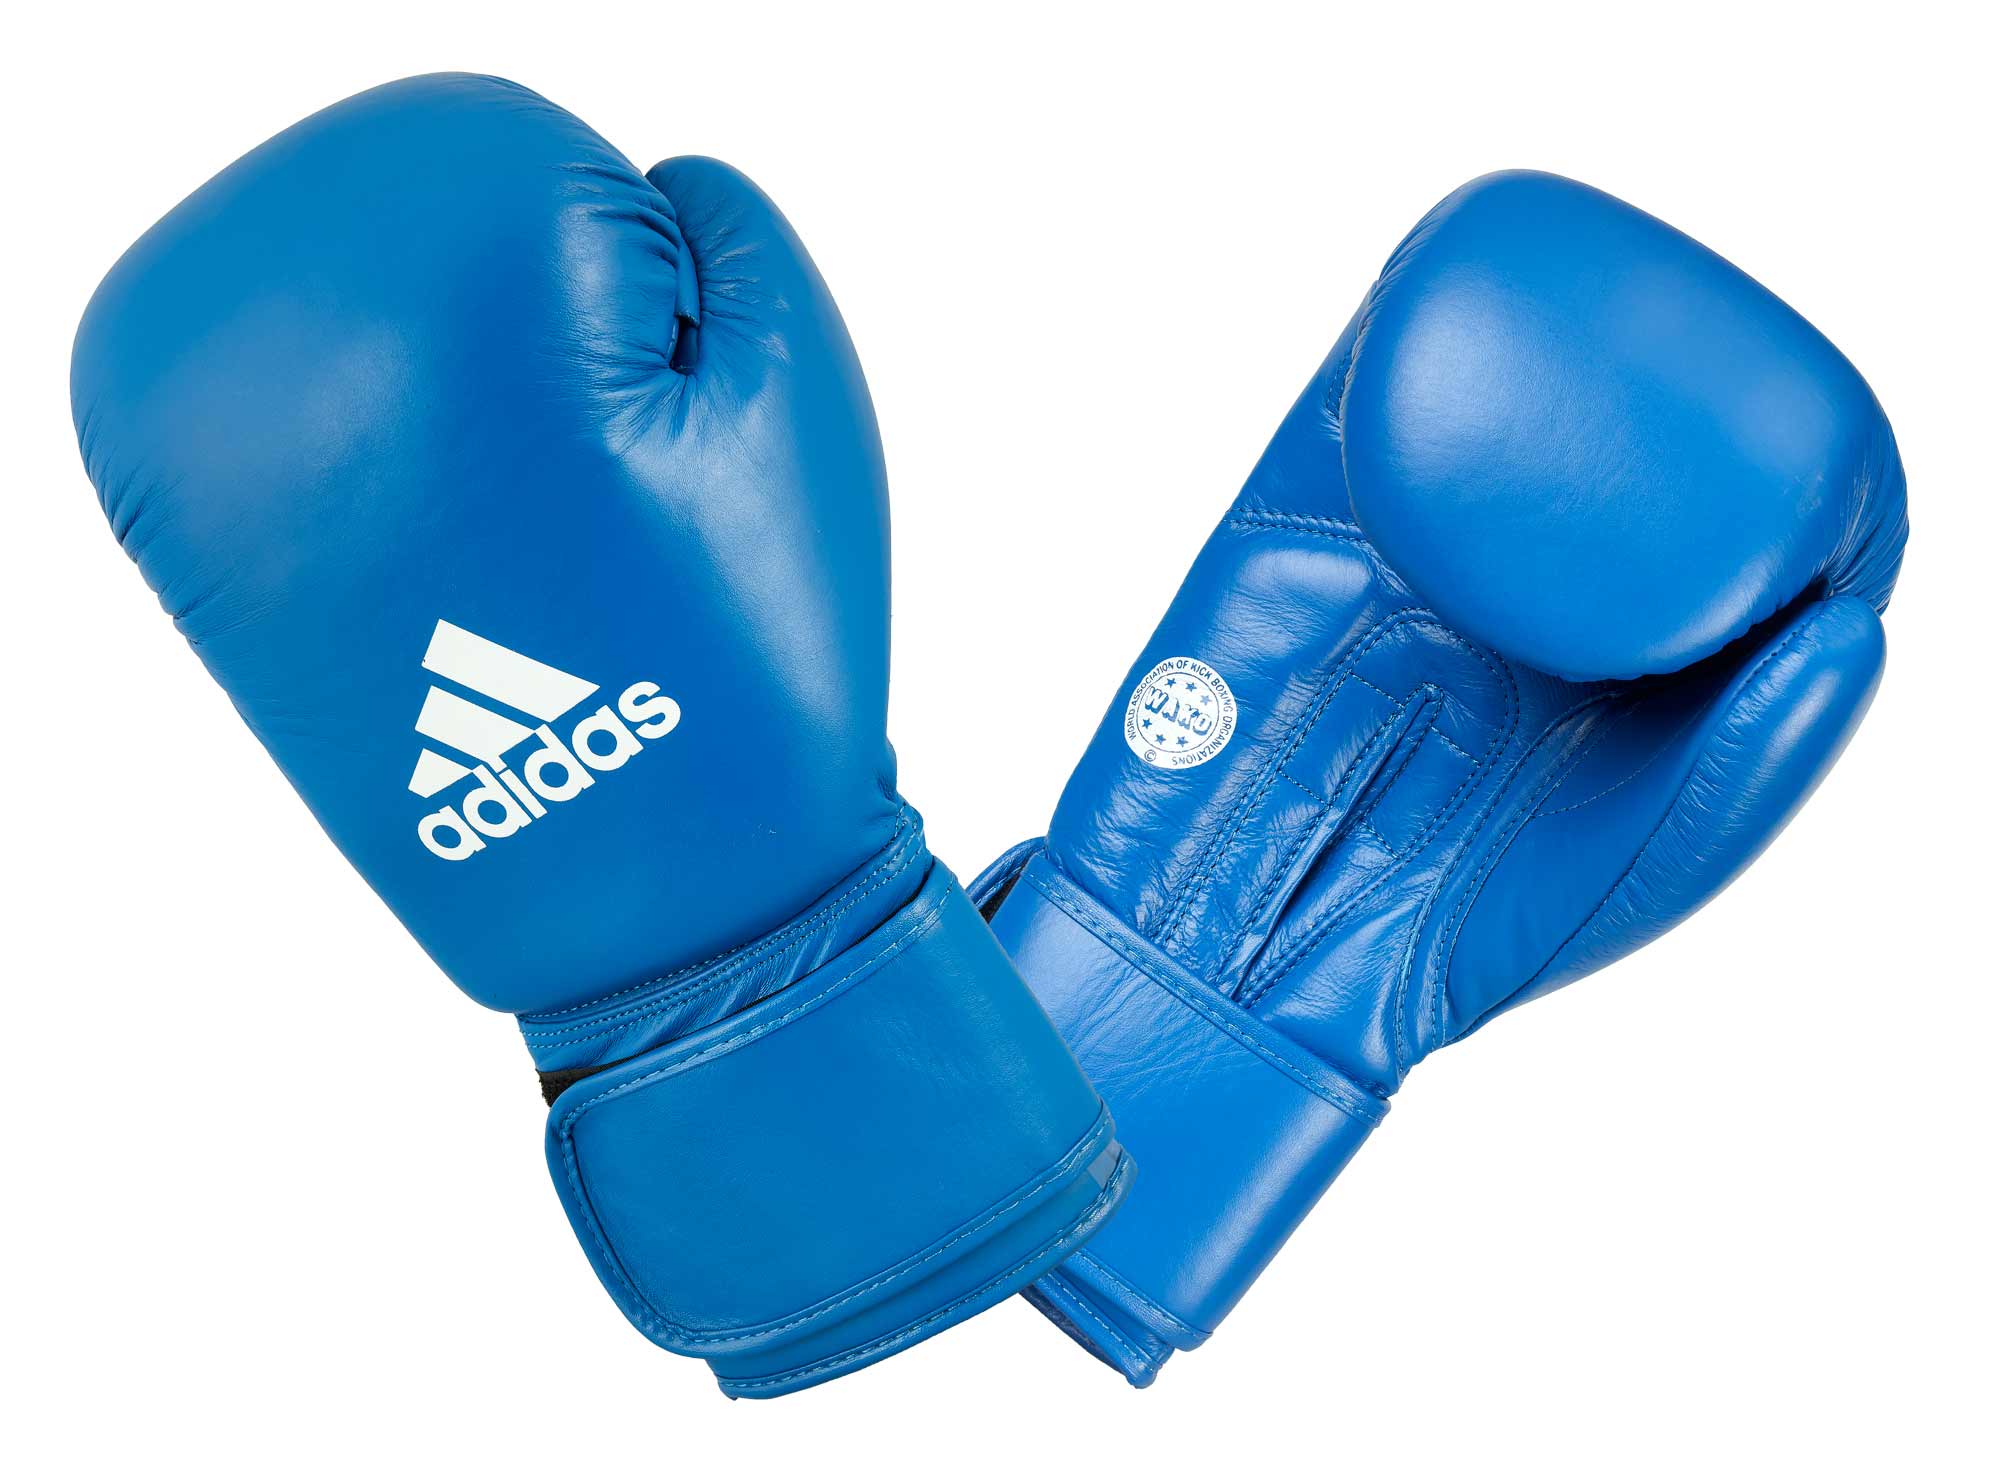 Adidas WAKO Kickboxing Gloves Leathe 10oz